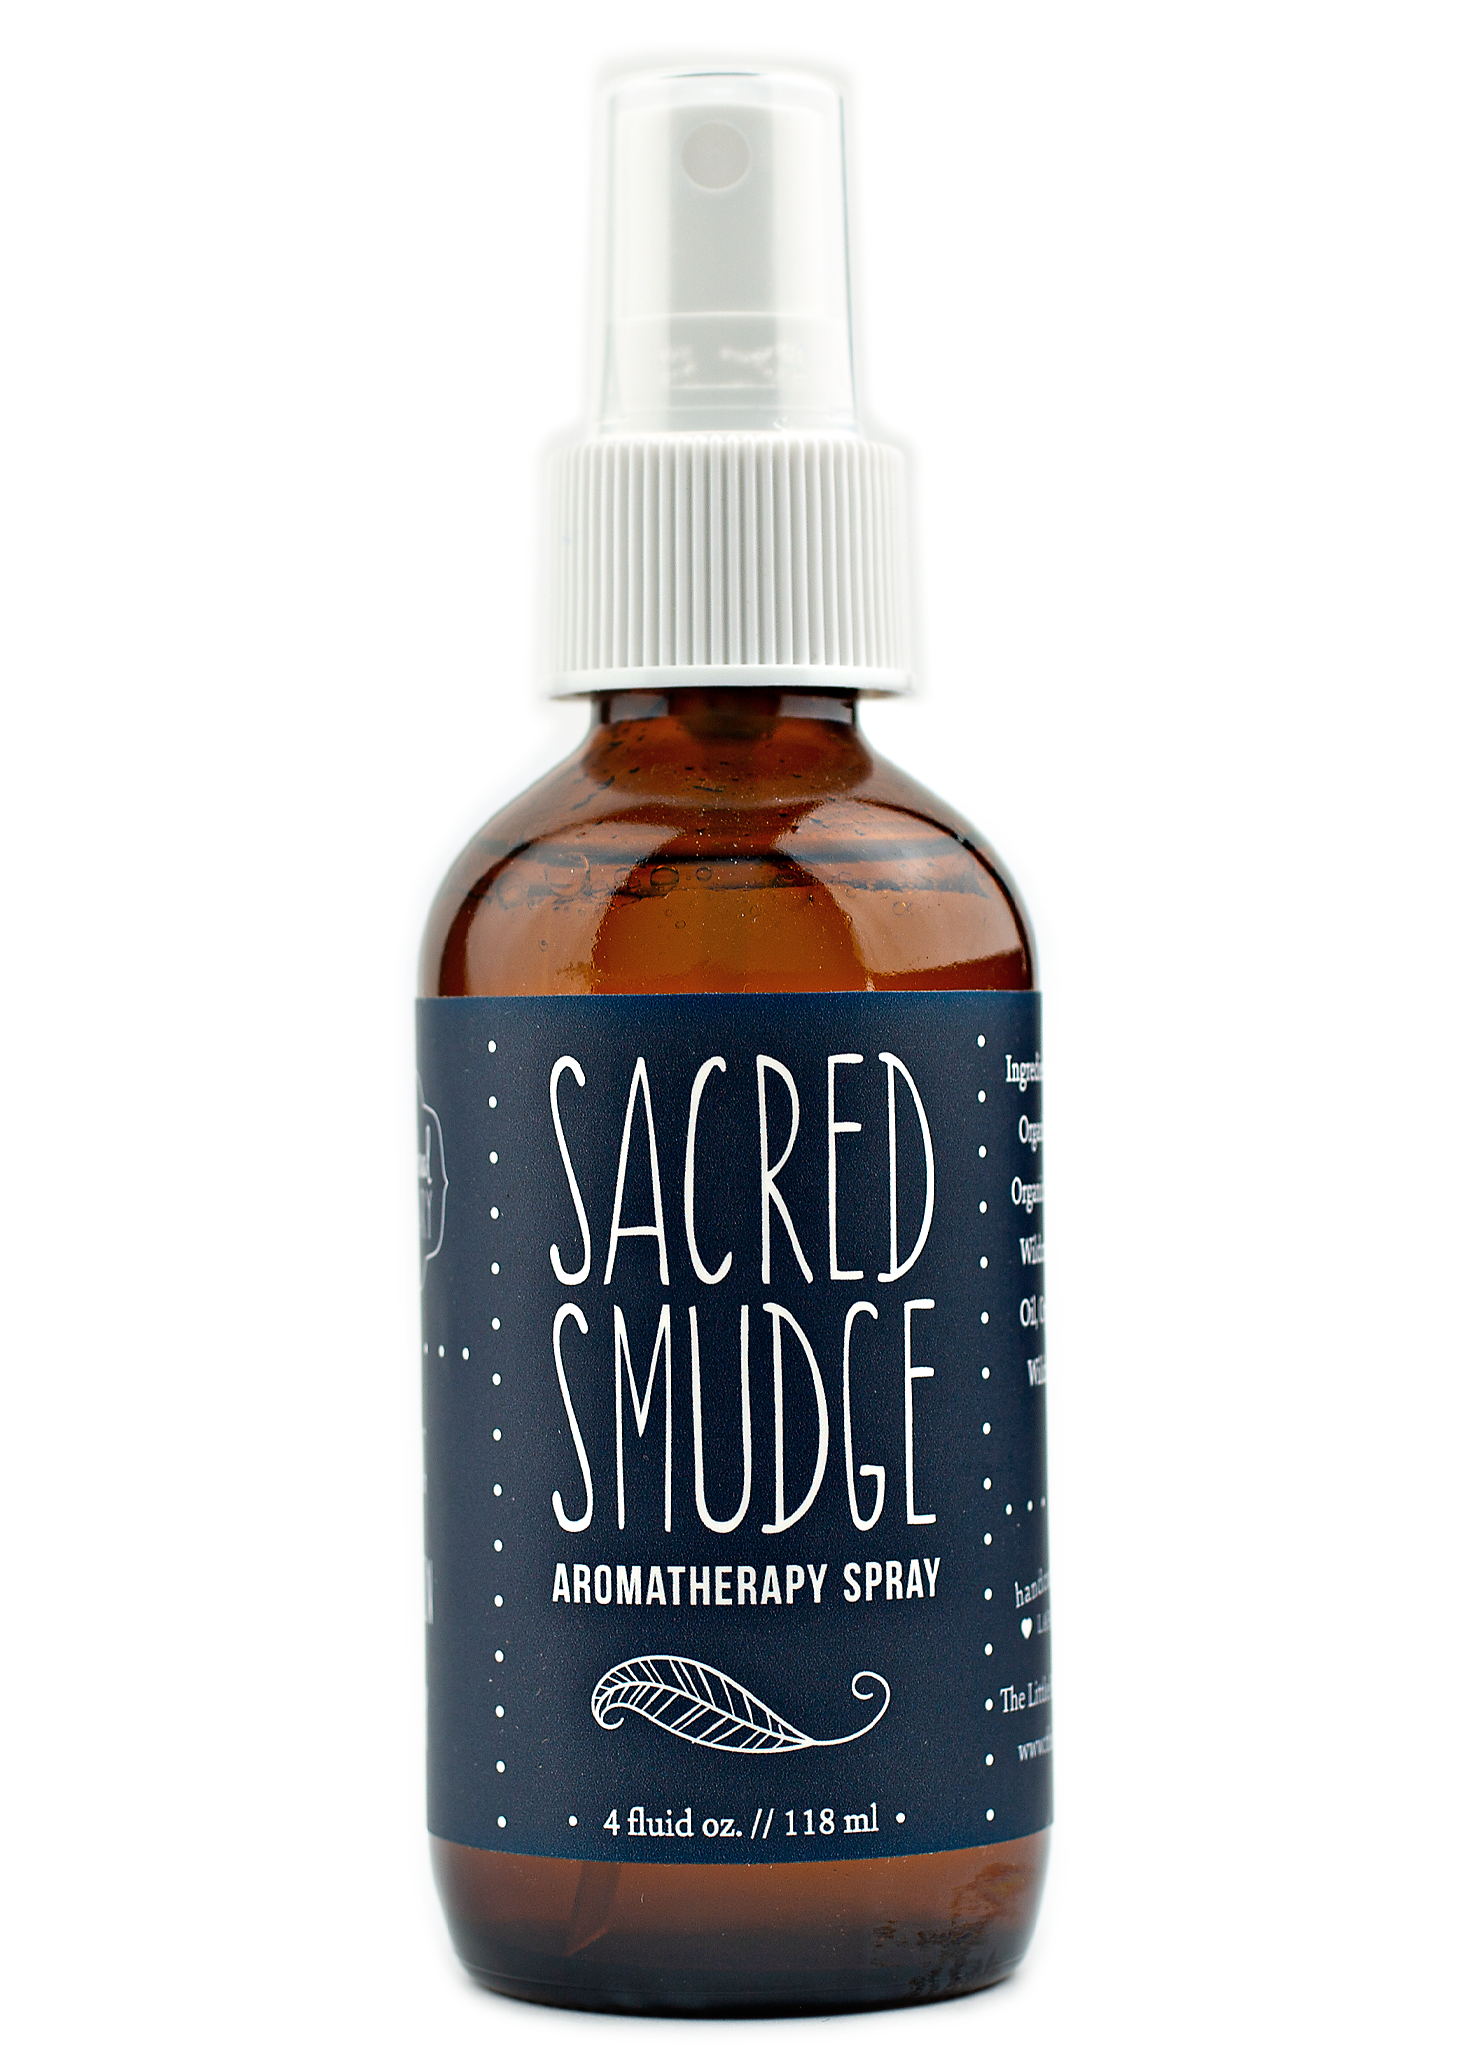 Sacred Smudge Spray